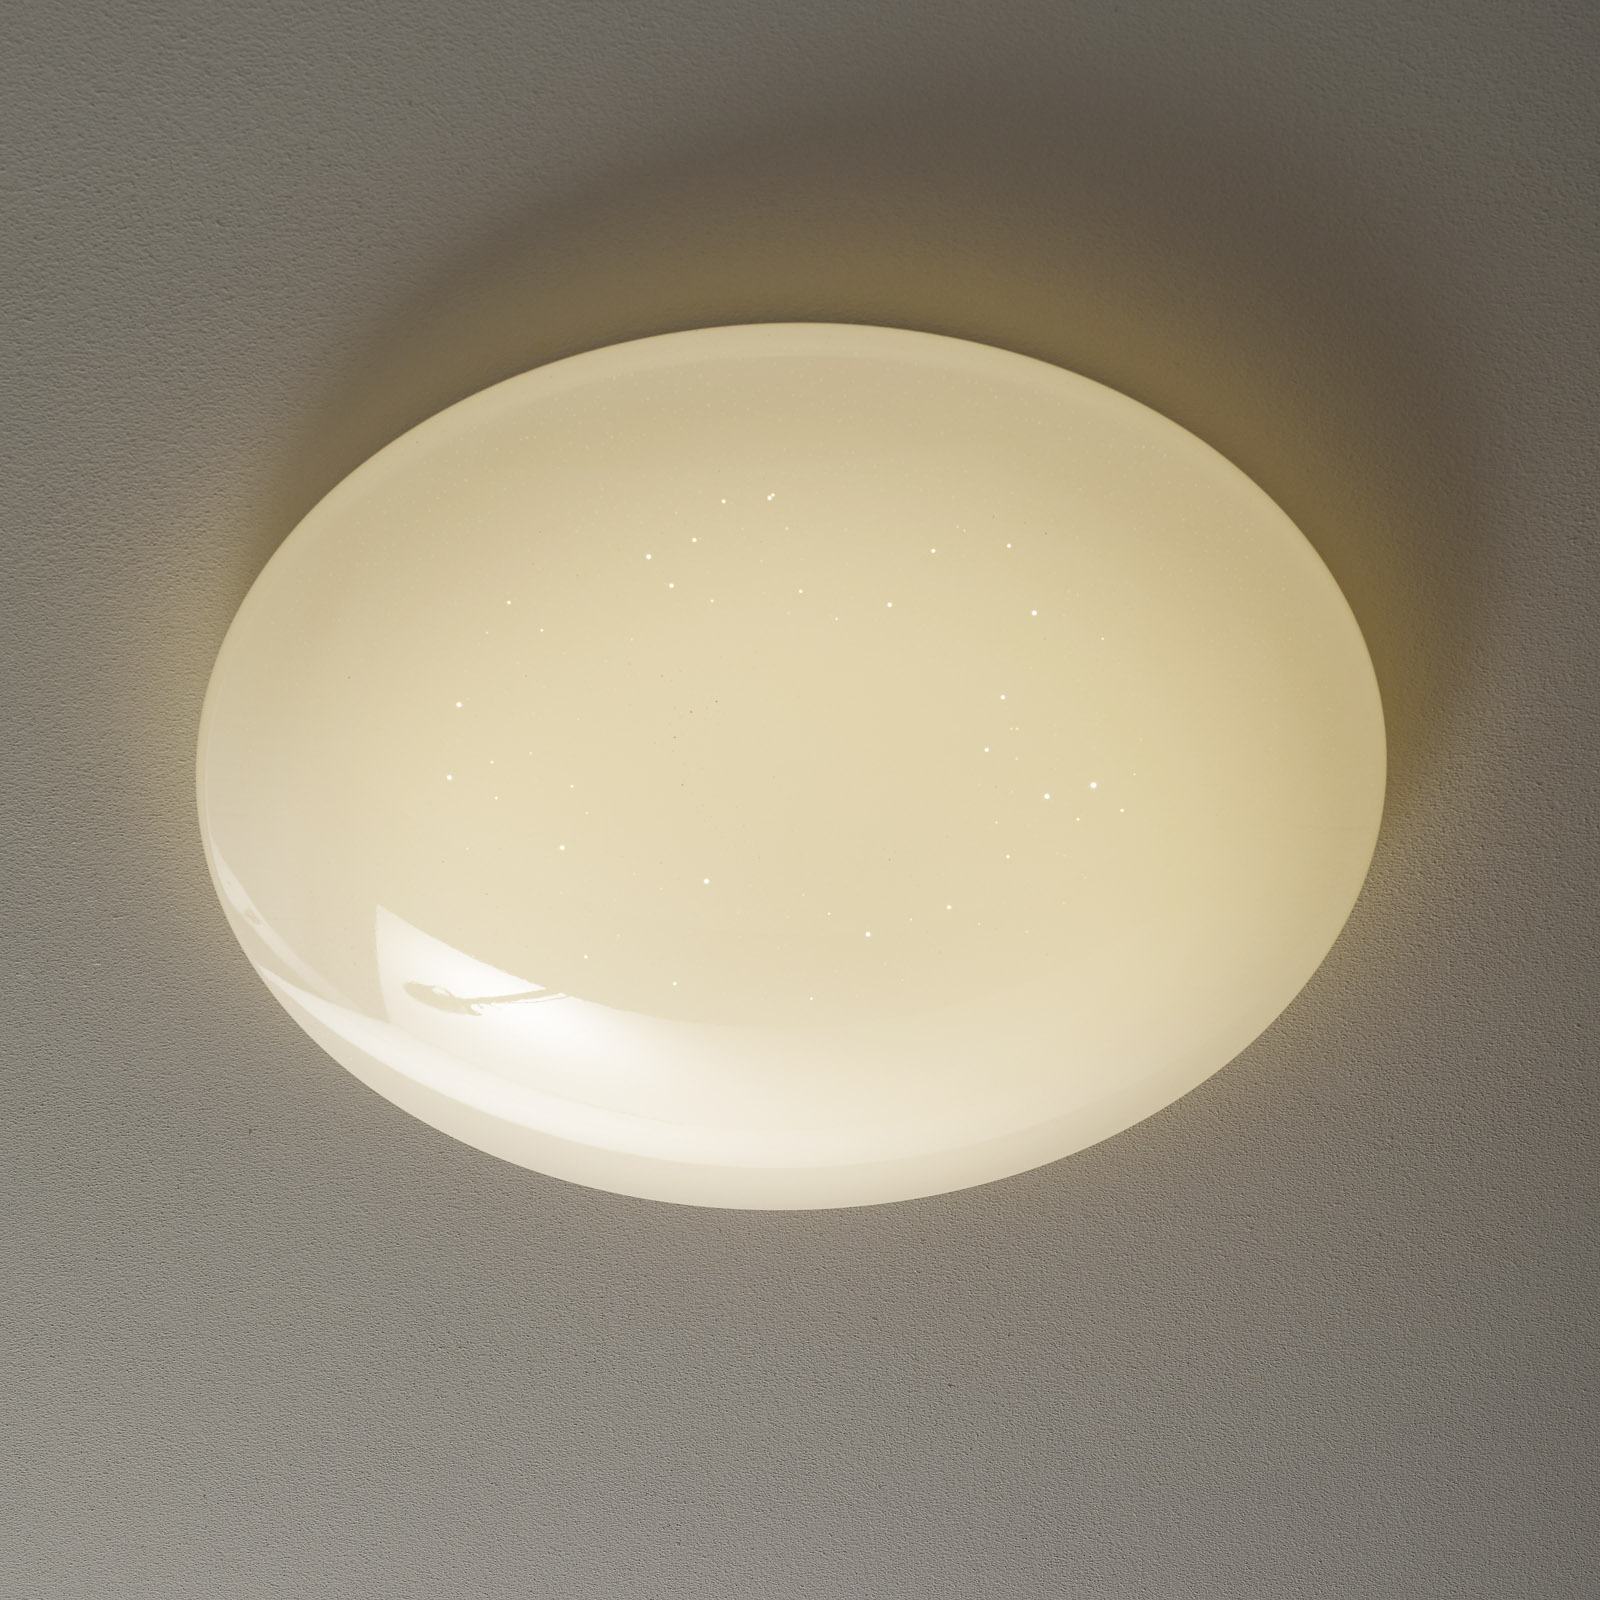 EGLO connect Totari-C LED plafondlamp | Lampen24.nl